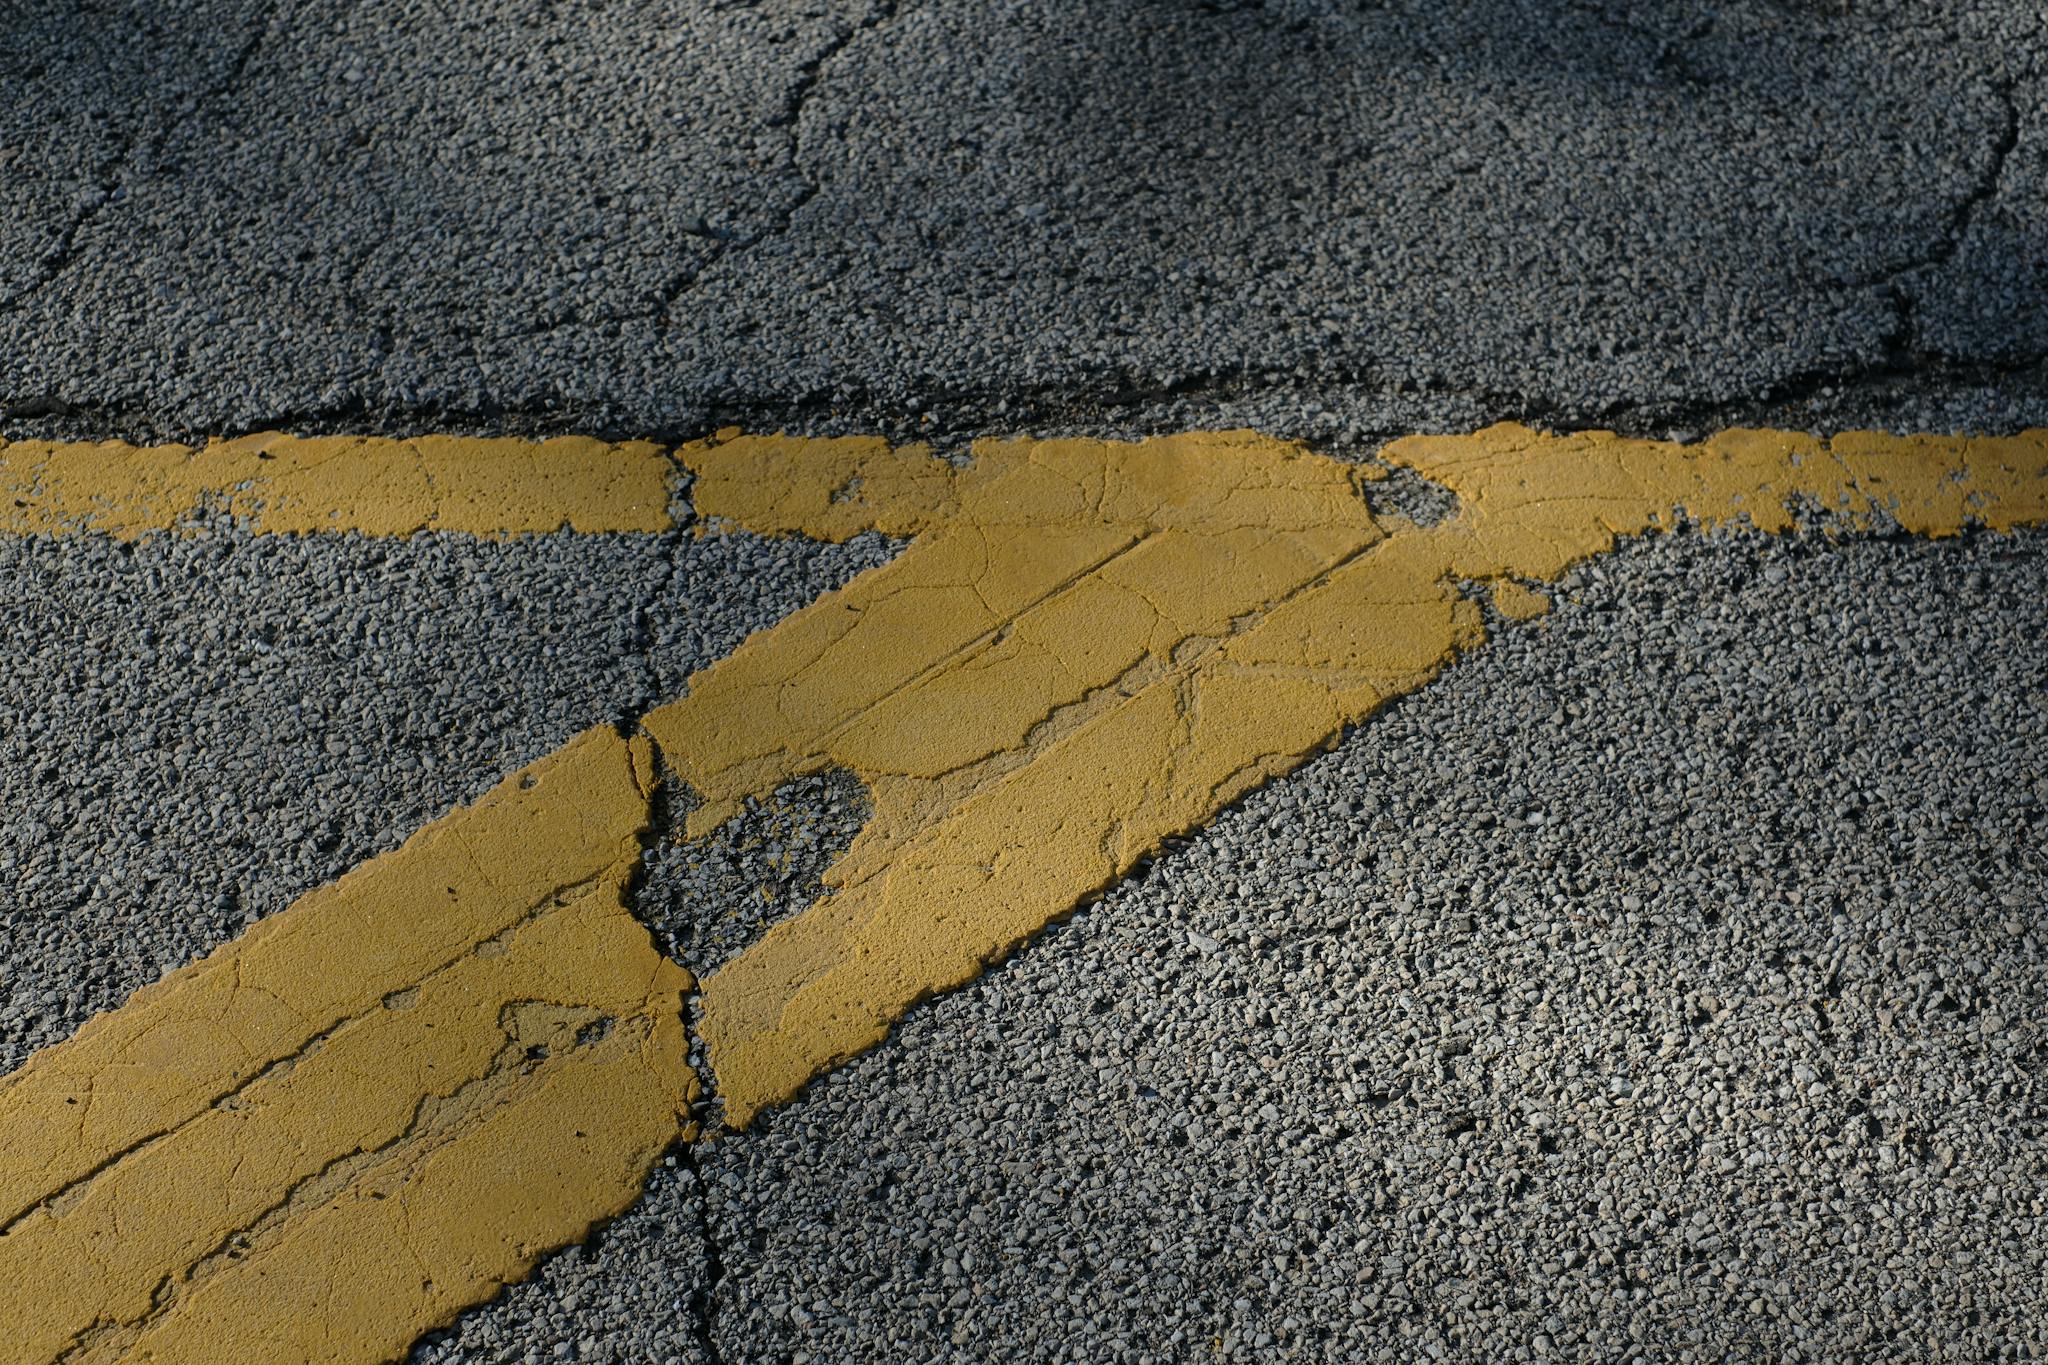 Weathered yellow road markings on cracked asphalt